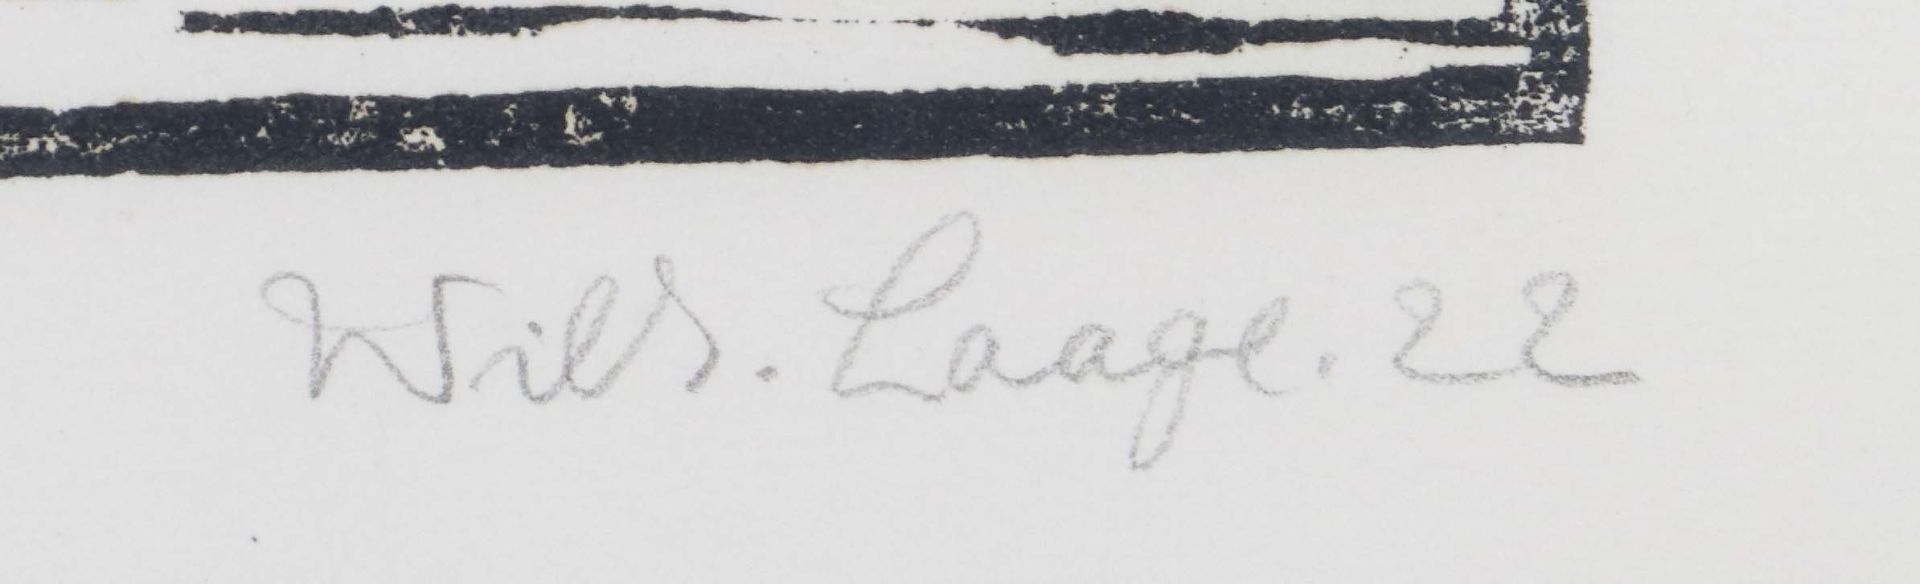 Laage, Wilhelm Stellingen 1868 - 1930 - Image 3 of 3